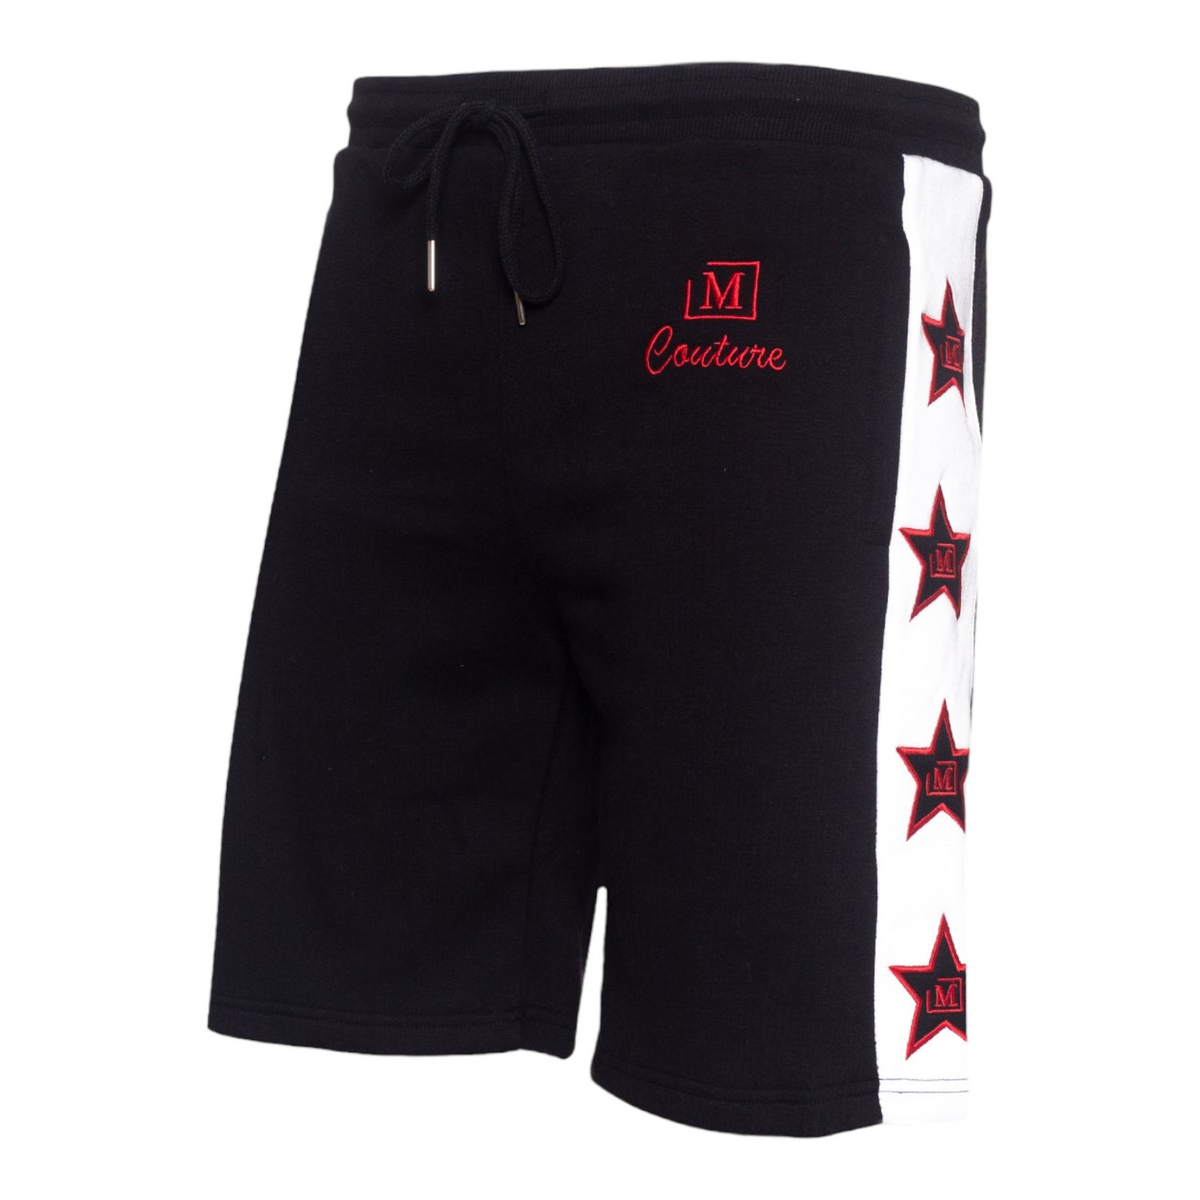 MDB Couture  Men's M-Star Shorts - Black